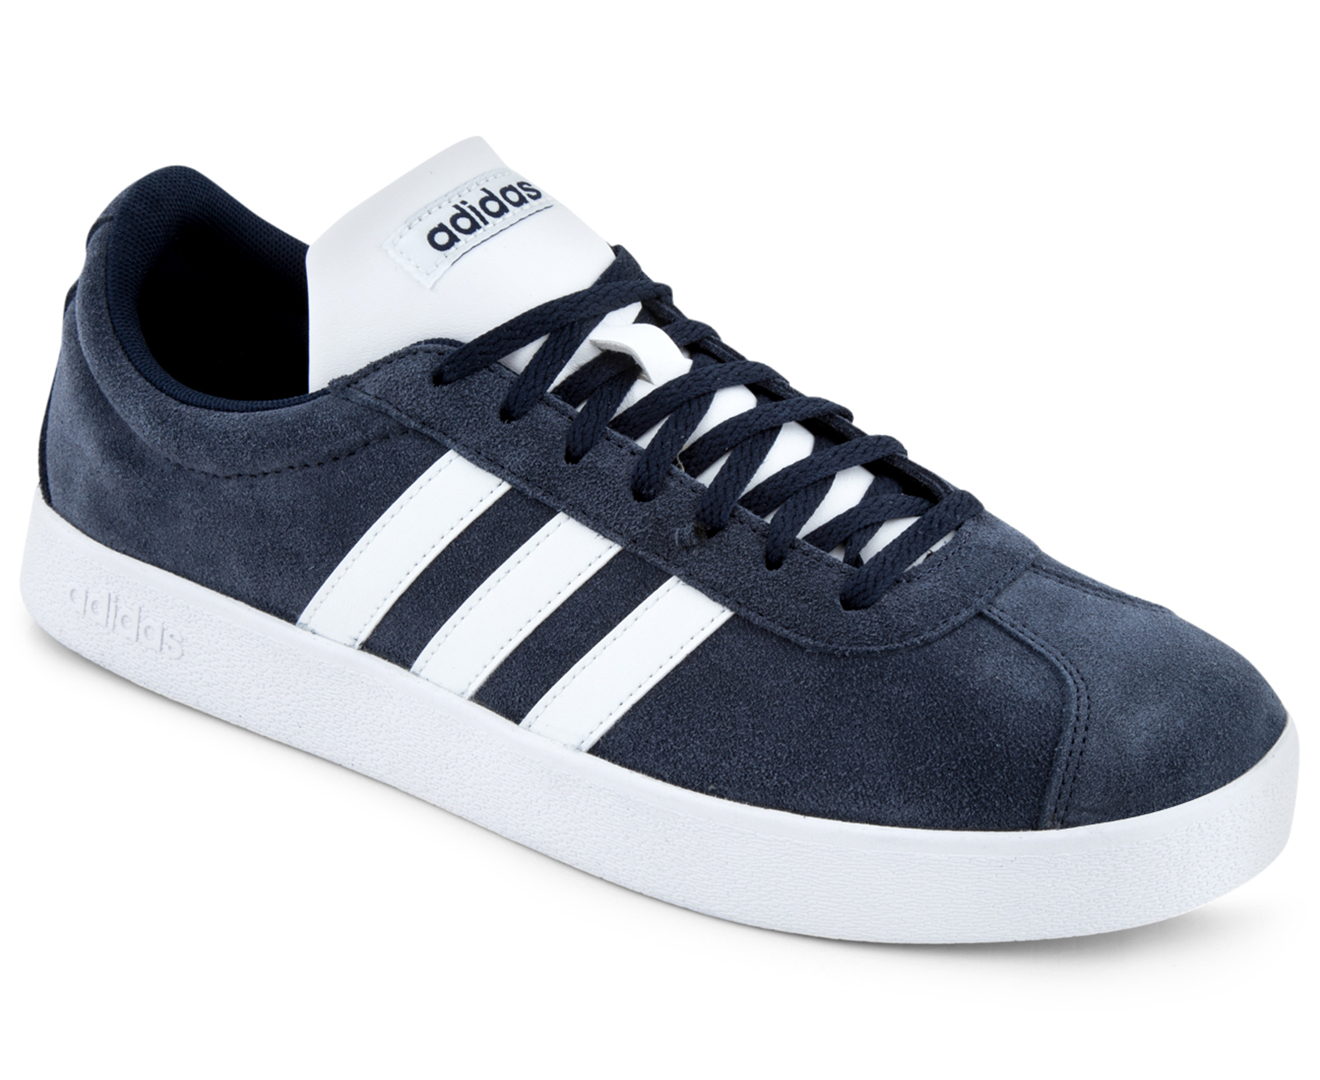 Adidas Men's VL Court 2.0 Shoe - Collegiate Navy/White/White | Catch.com.au